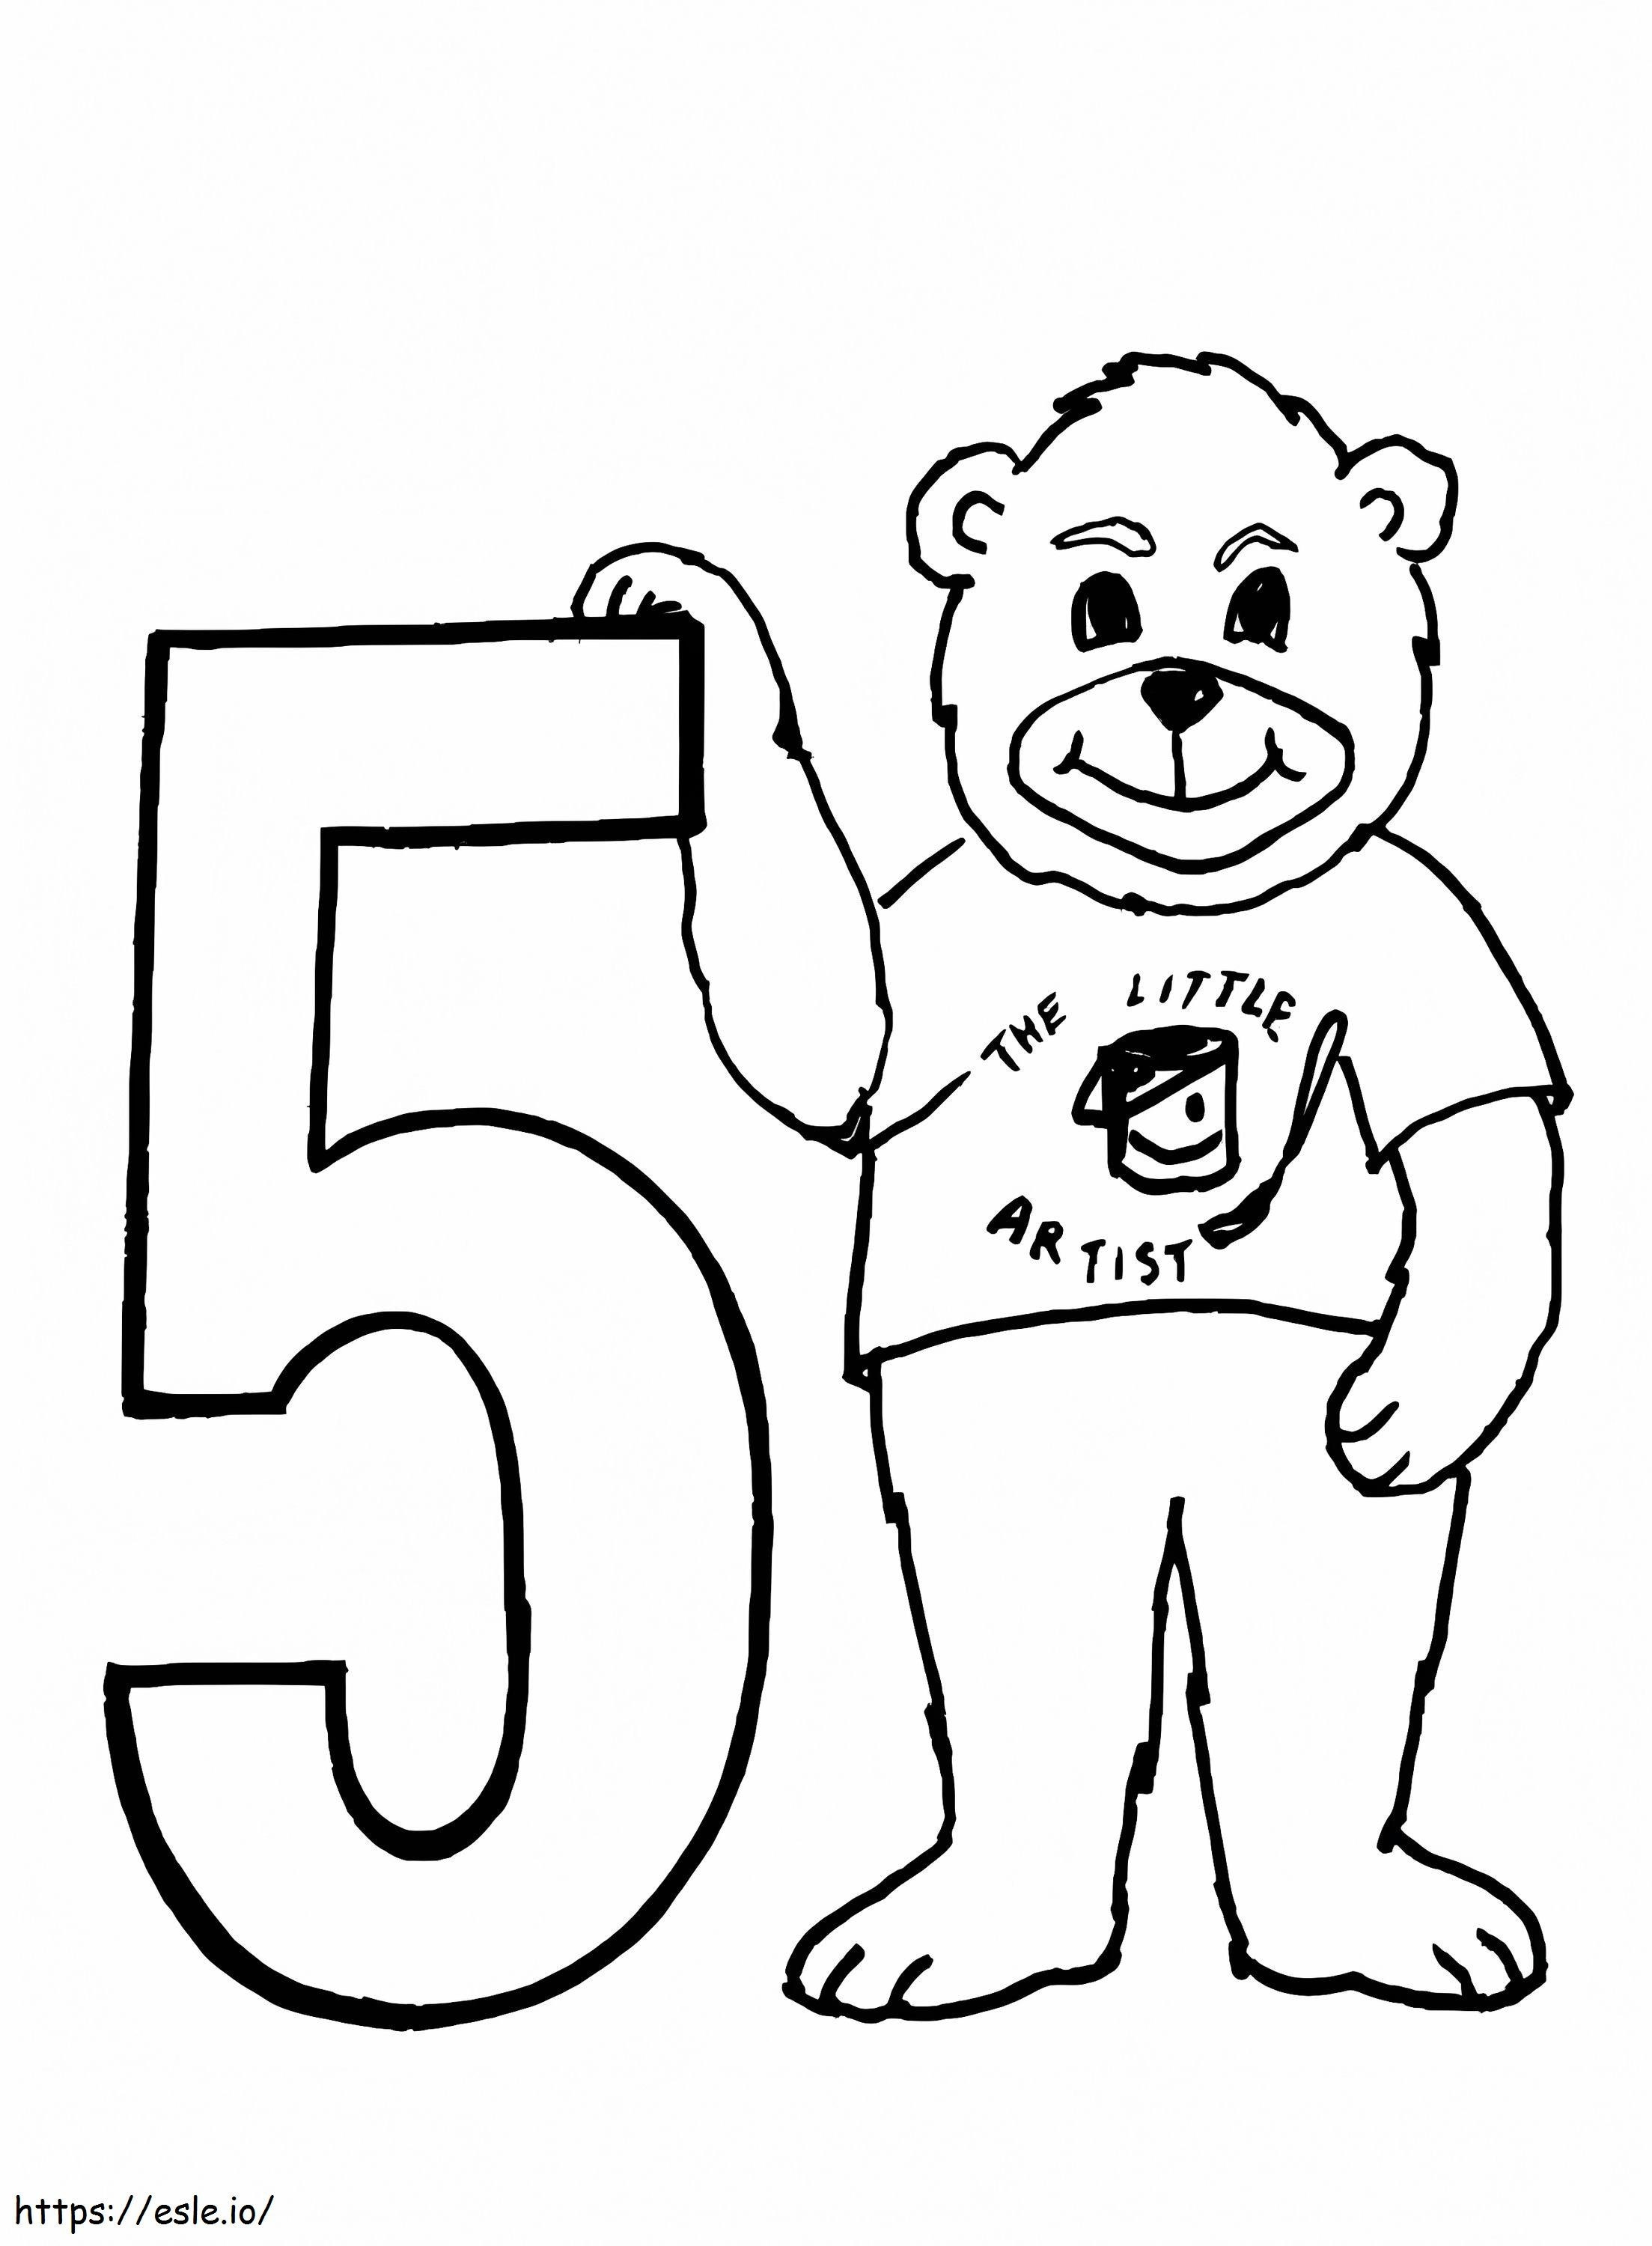 Urso e número 5 para colorir